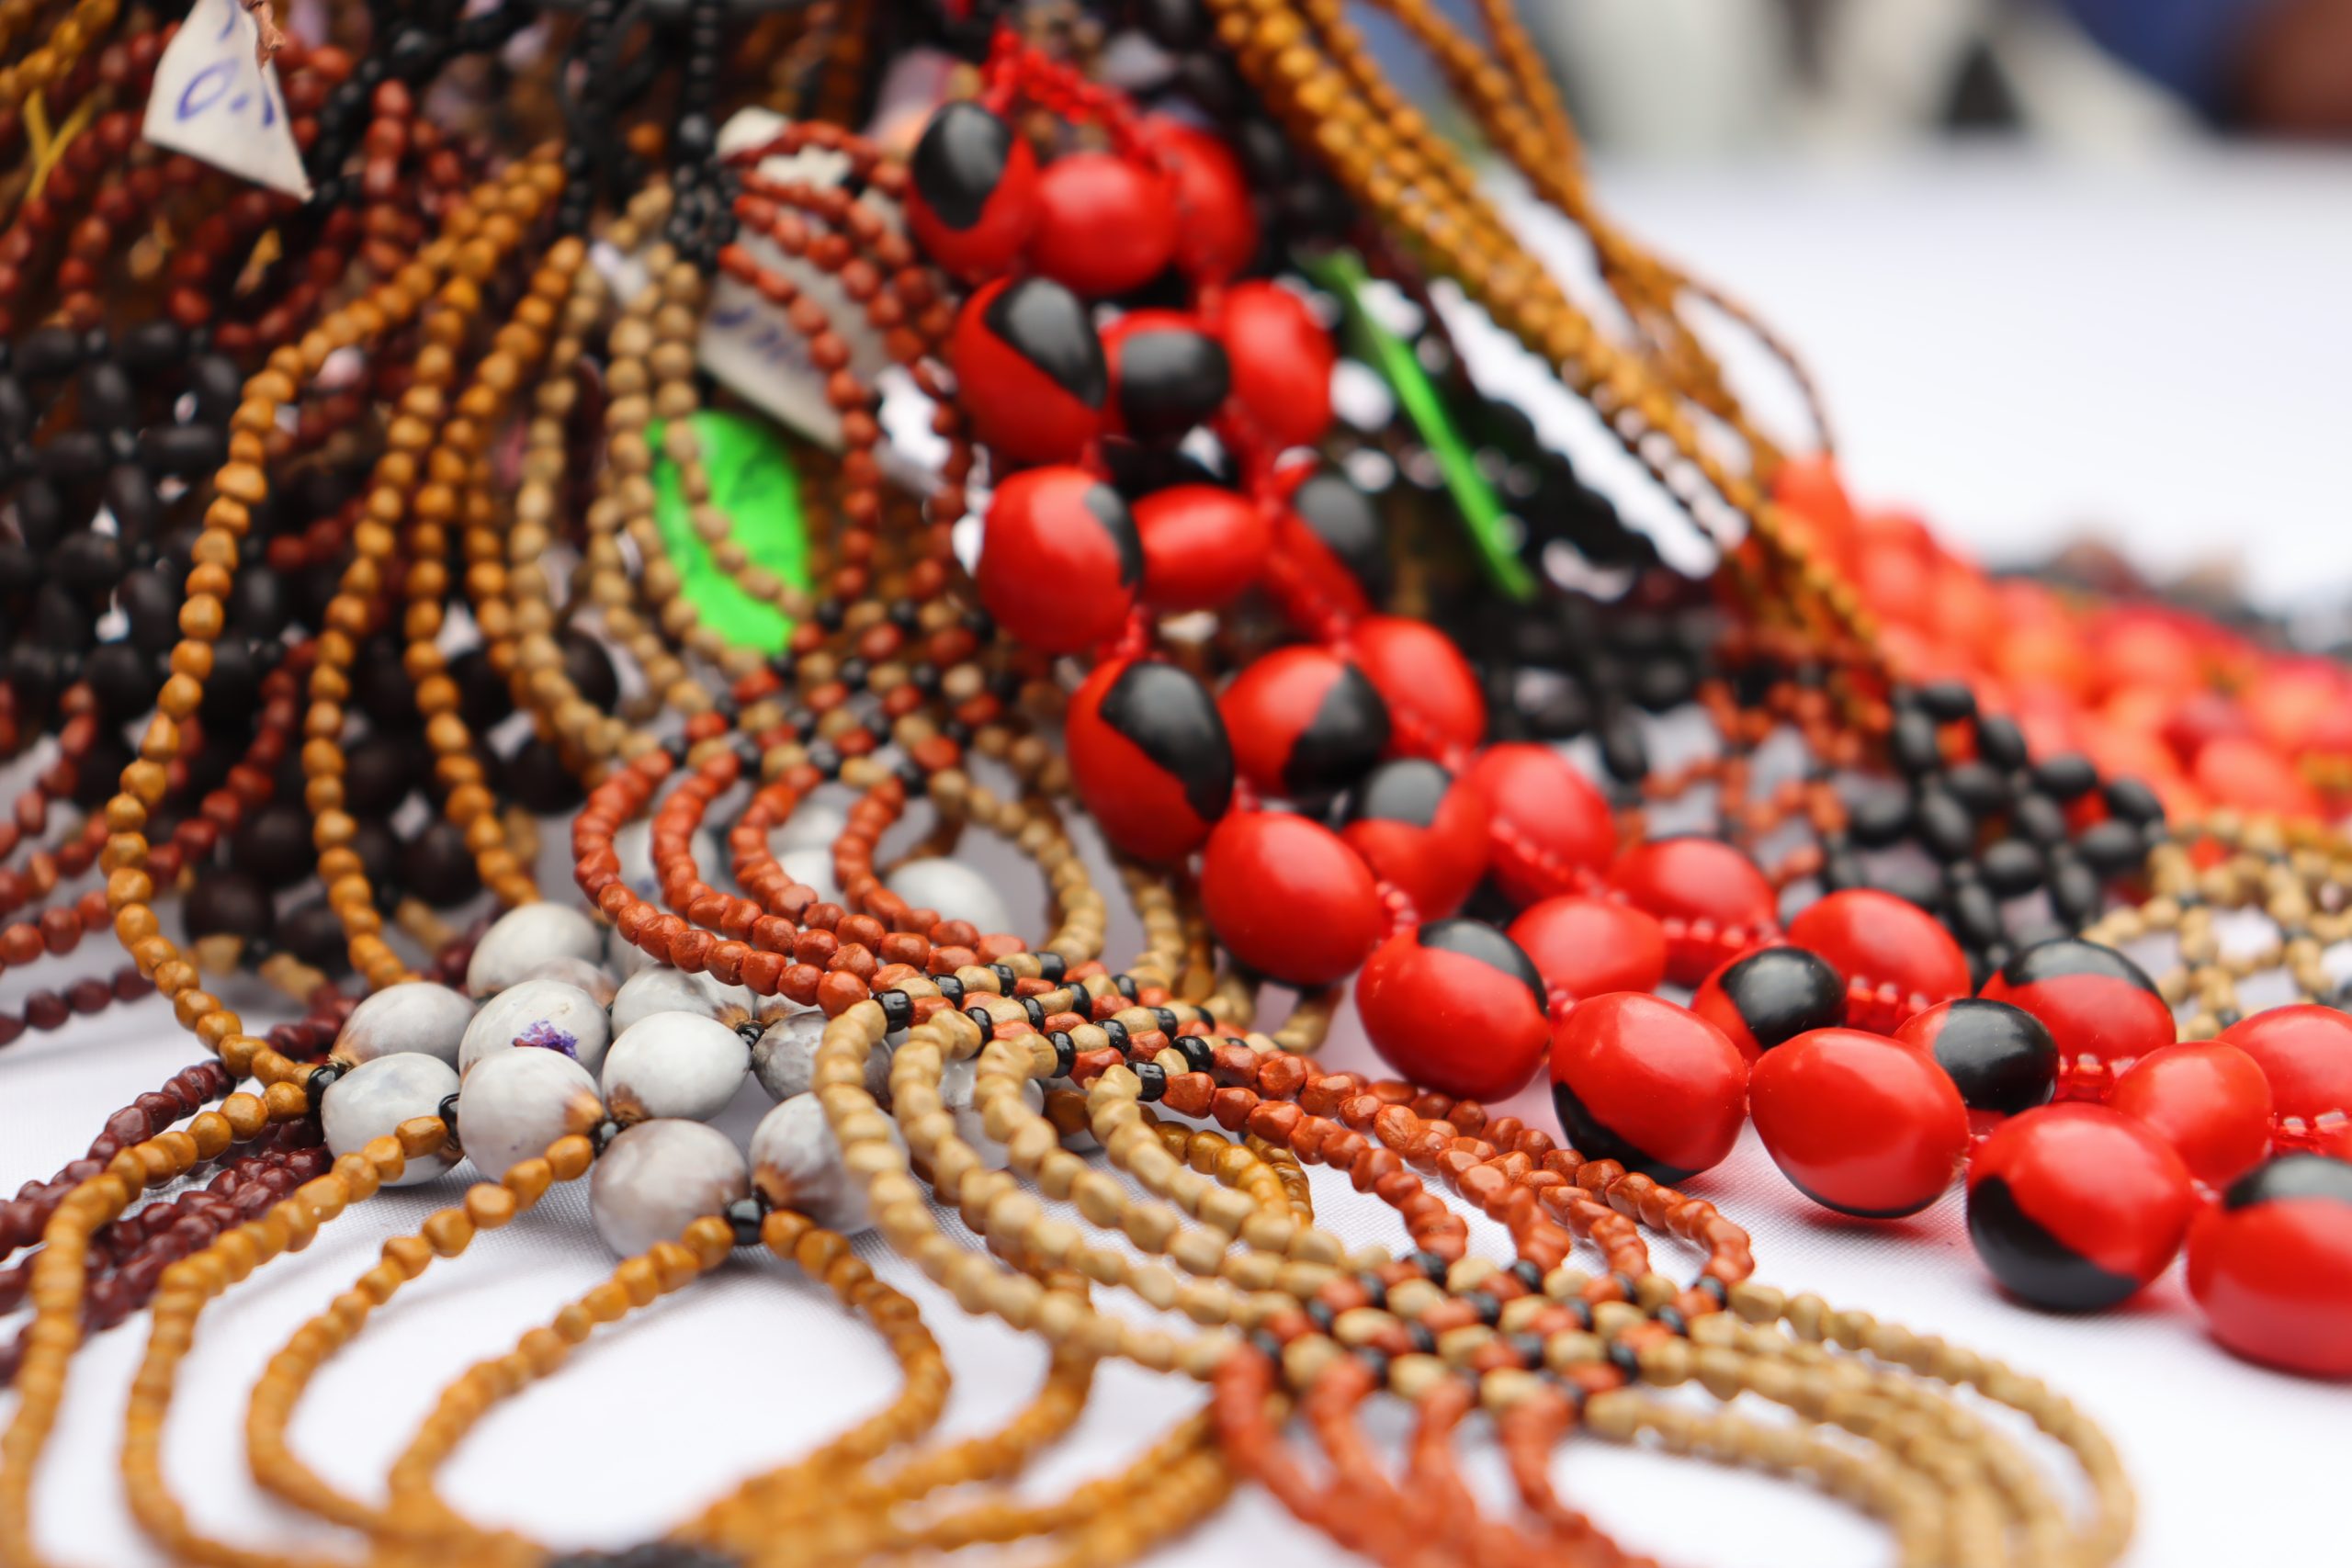 Necklace/jewelry/bracelets/Amarno crafts Amano, artisans association from the awajun program, at entrepreneurship fair in Lima.